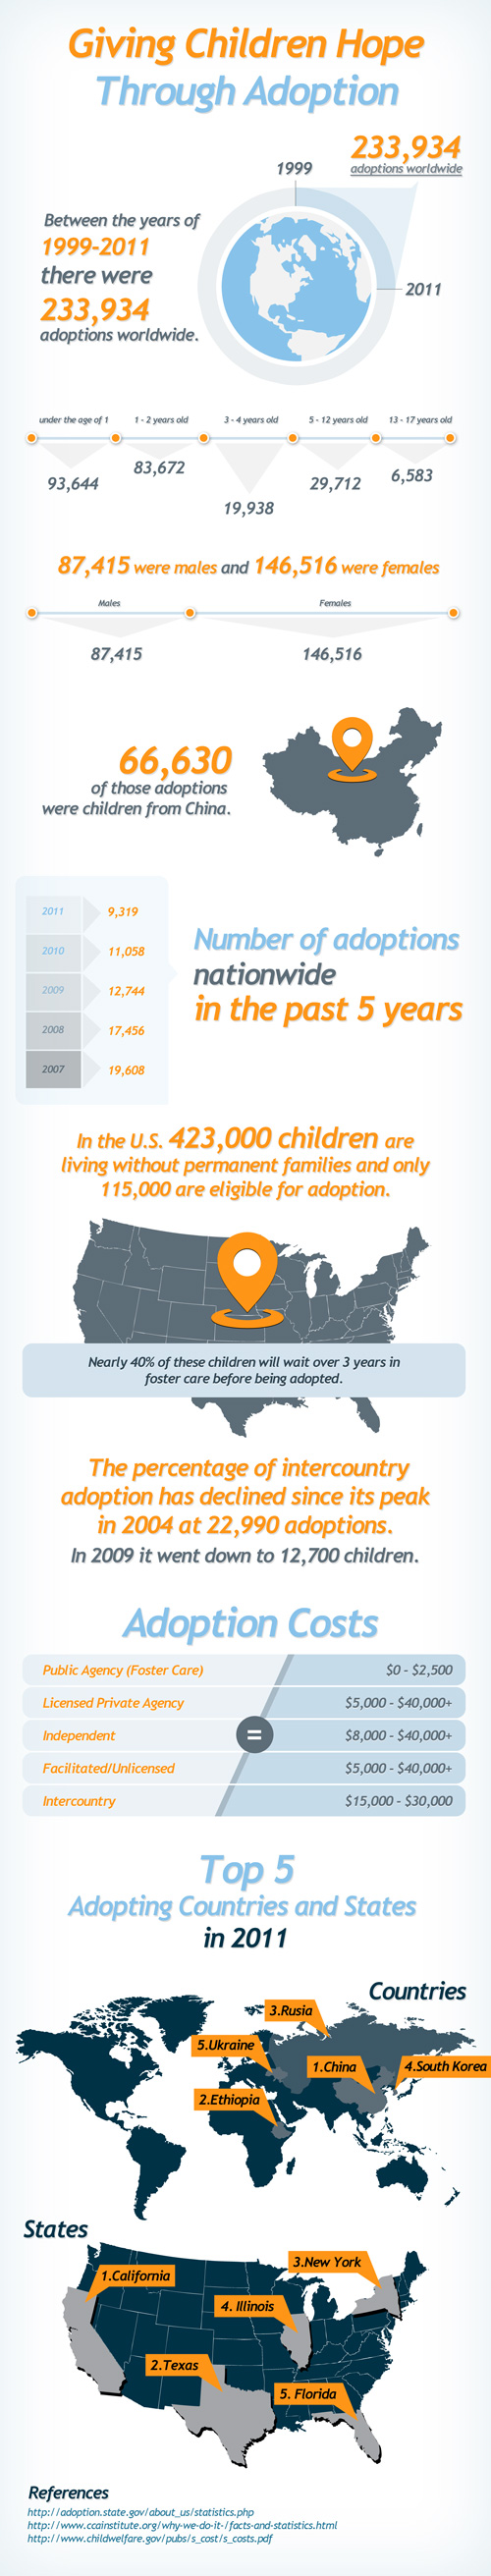 Worldwide Adoption Statistics-Infographic